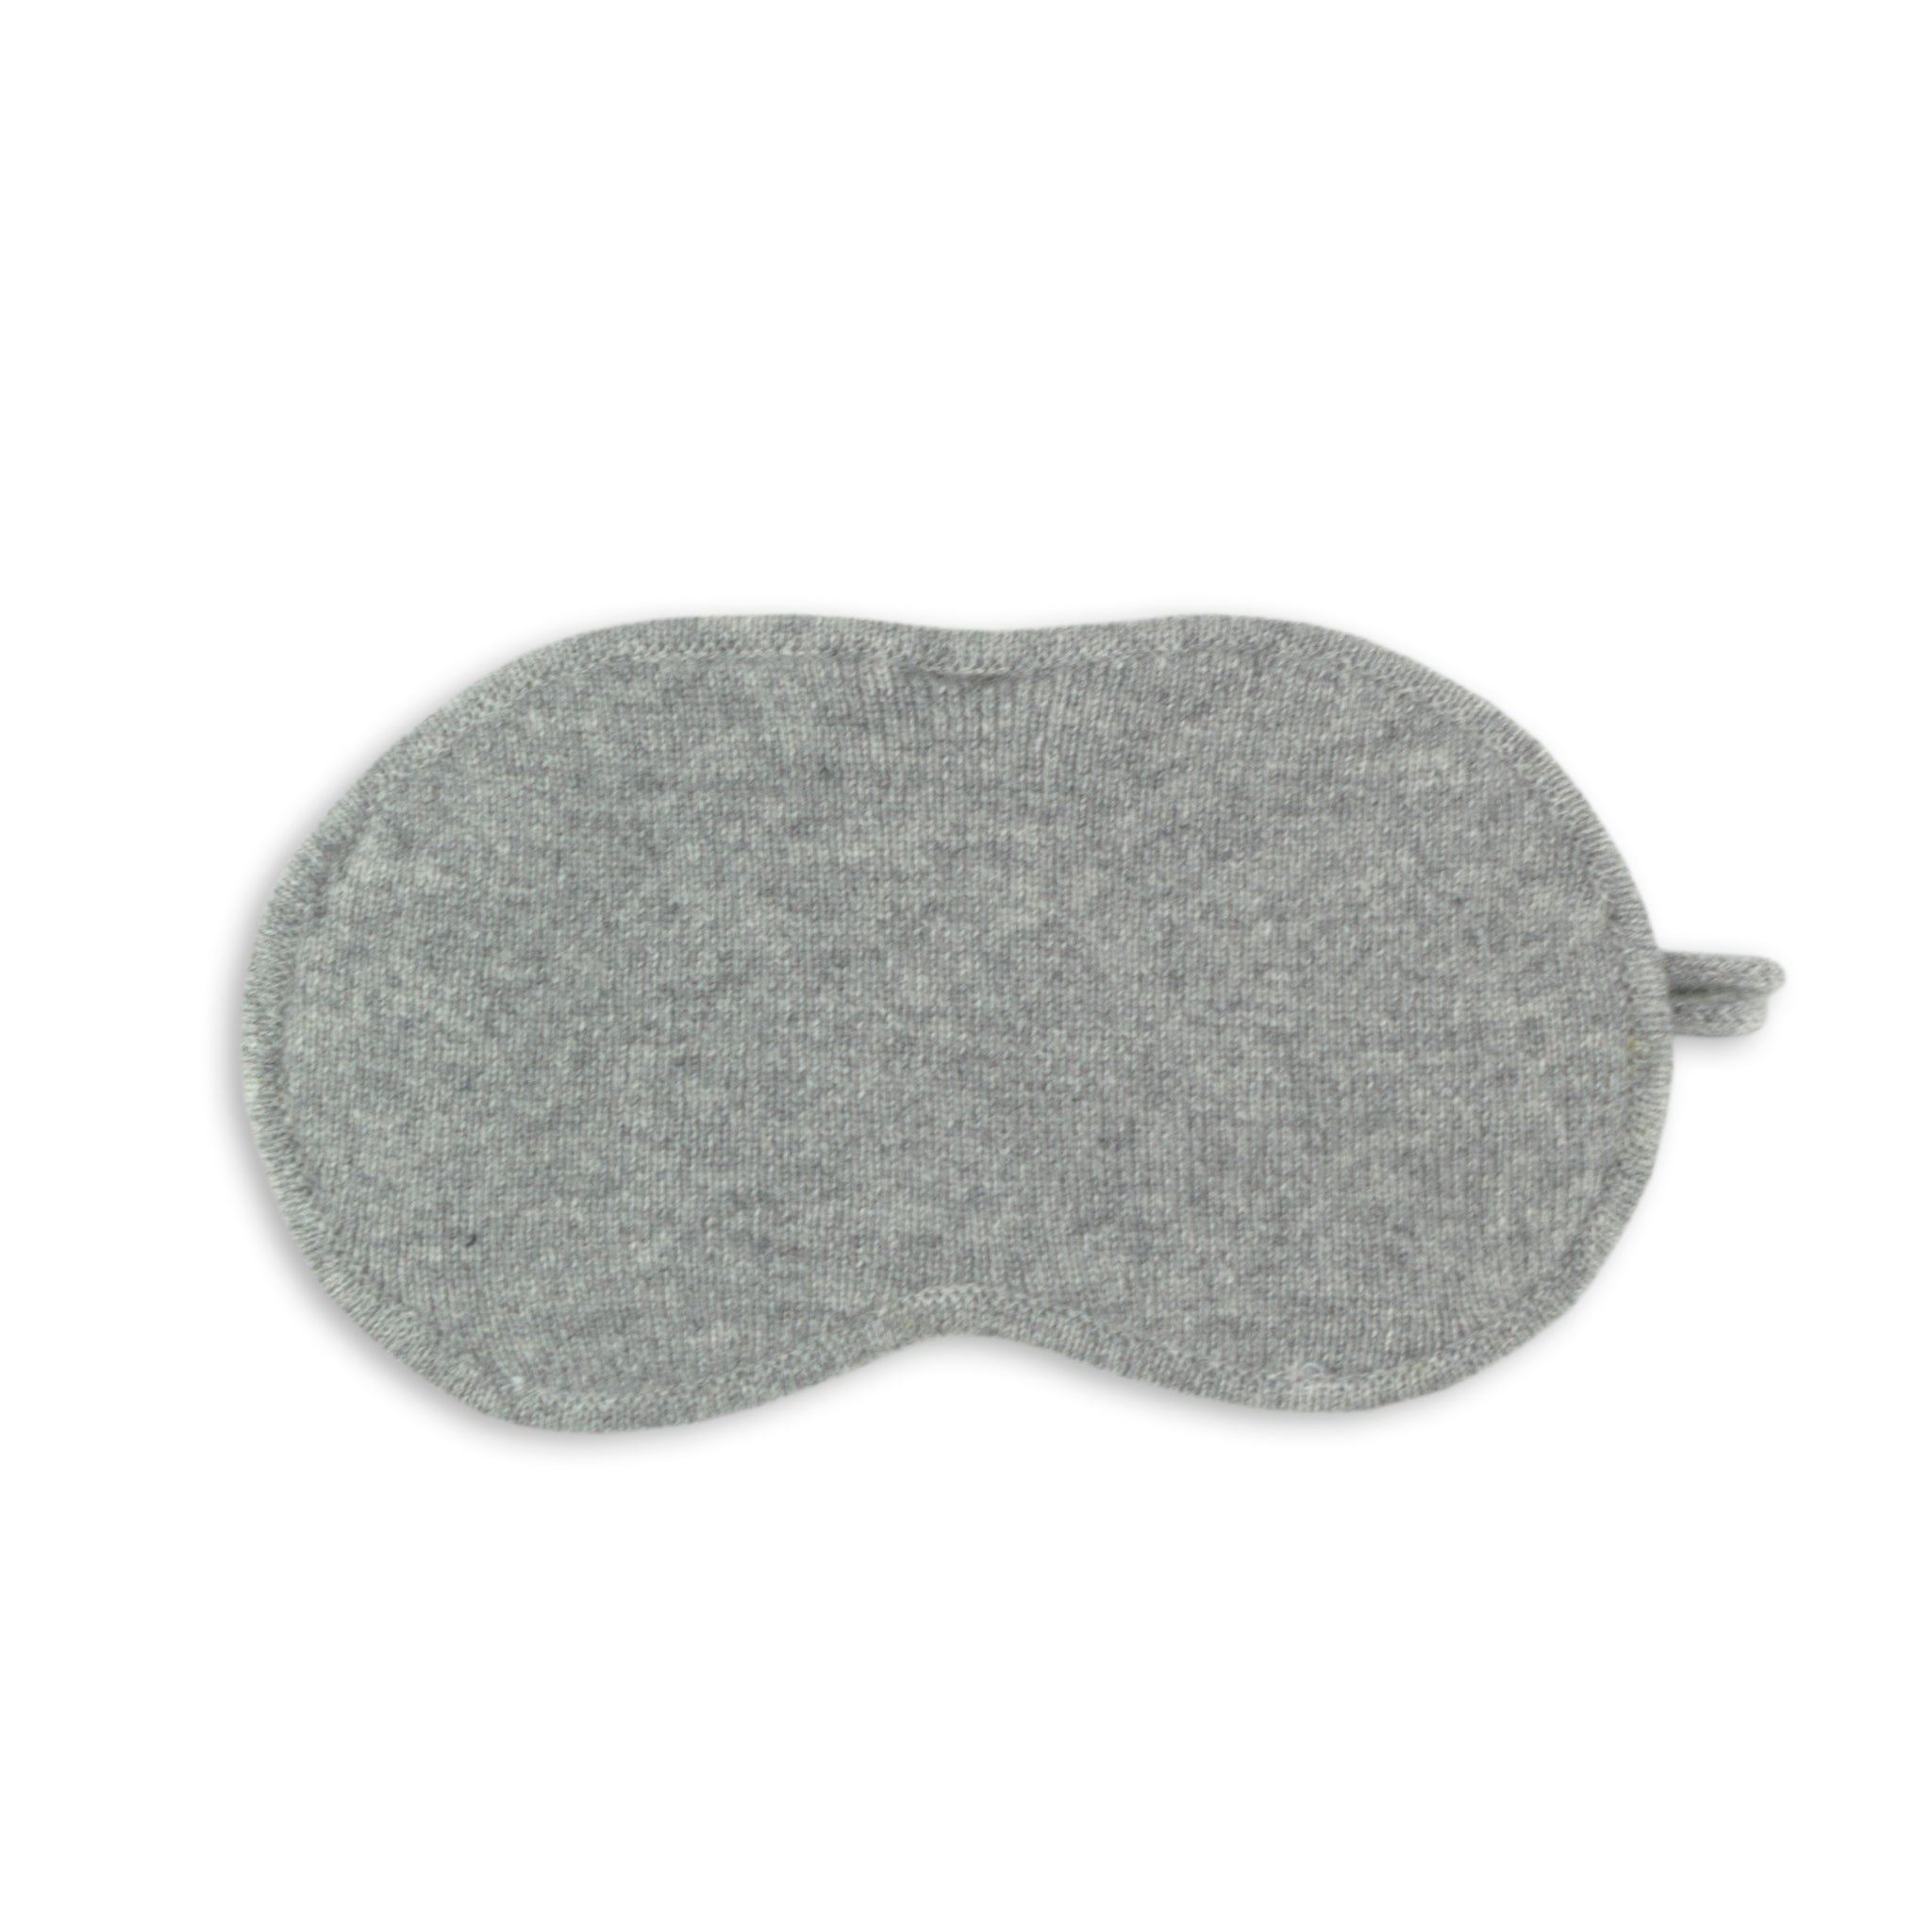 100% Pure Cashmere Eye Mask | Black & Gray